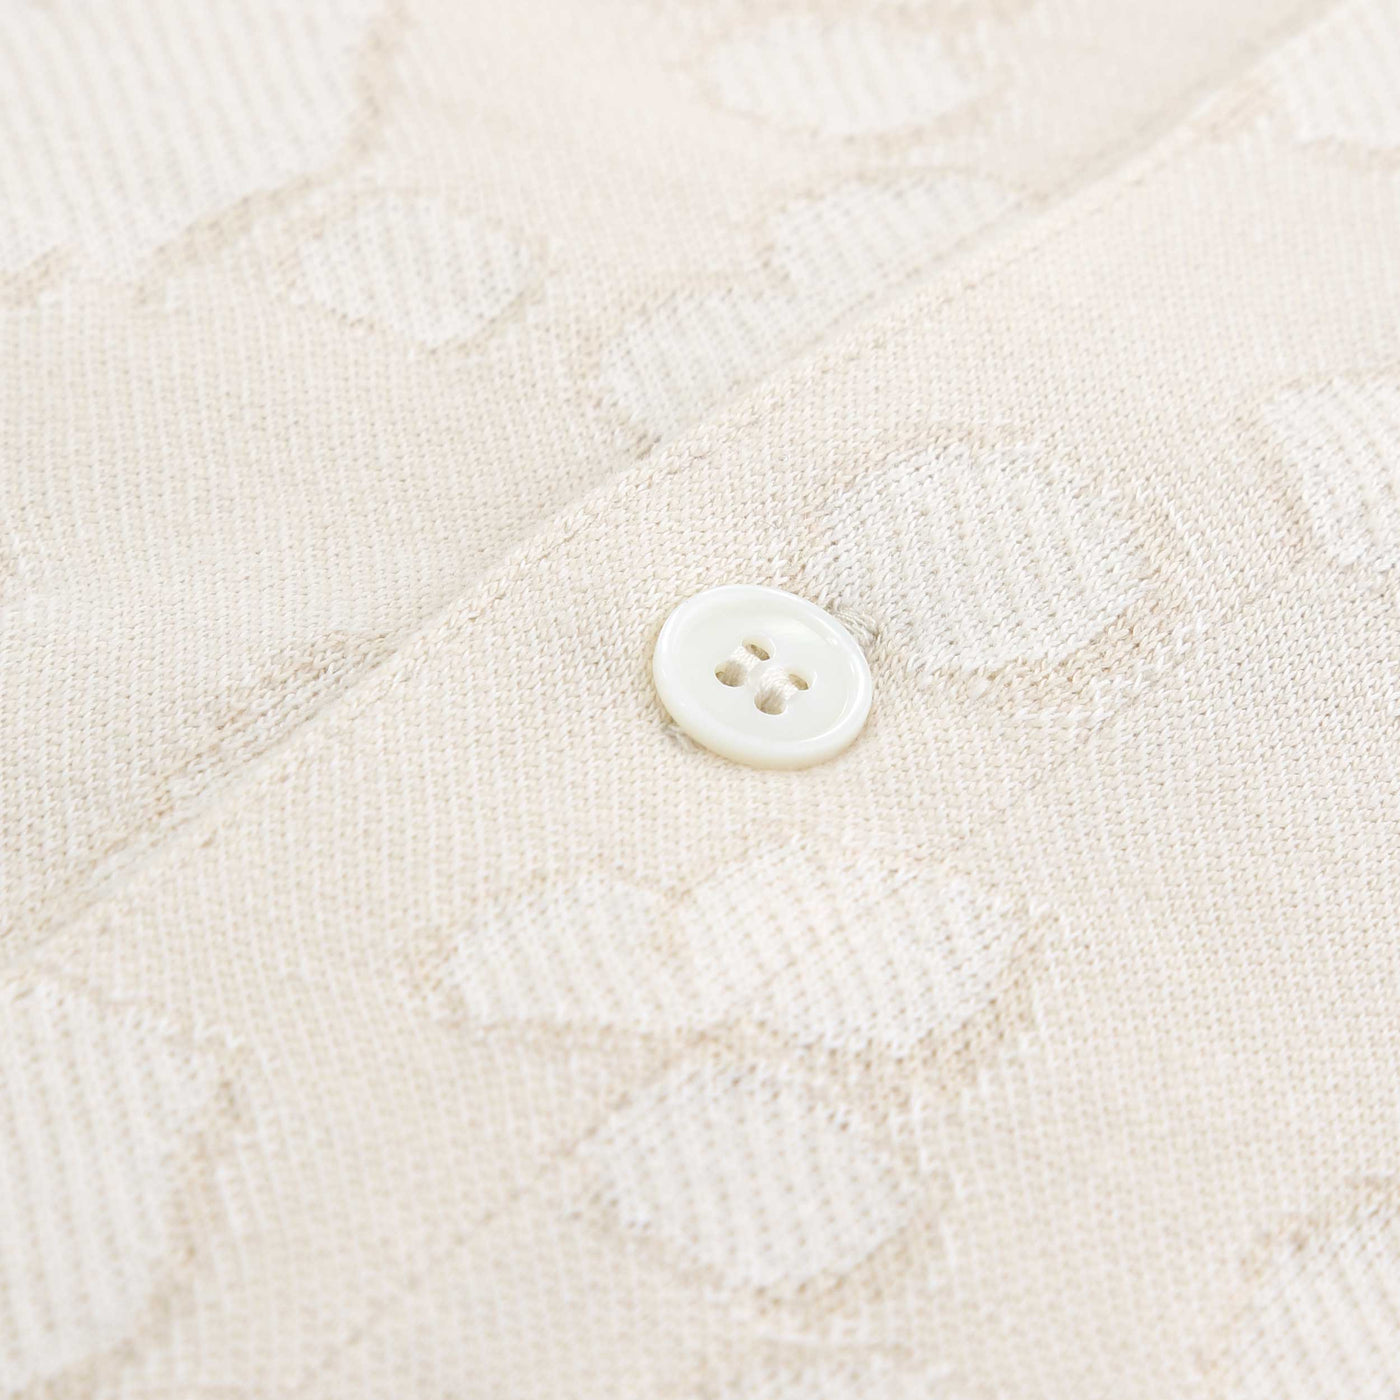 Paul Smith Floral Jacquard Polo Shirt in Cream Button